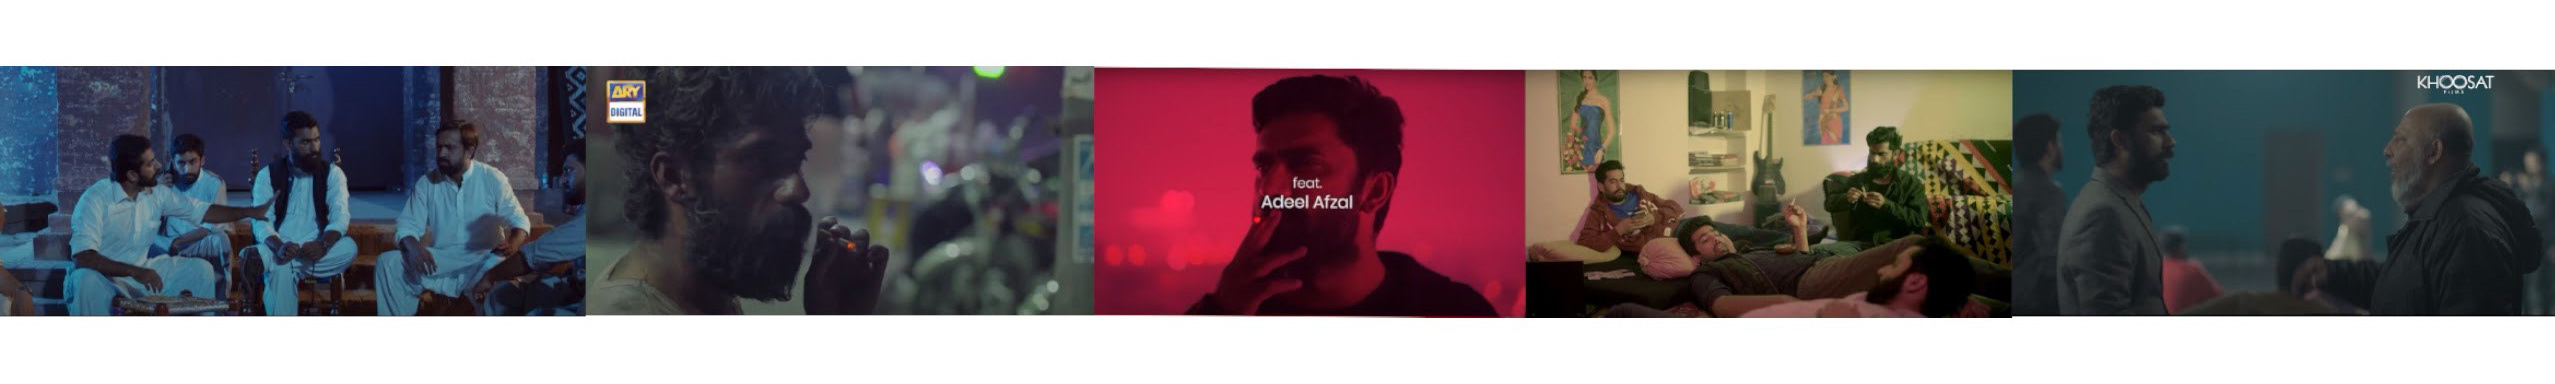 Adeel Afzal's profile banner